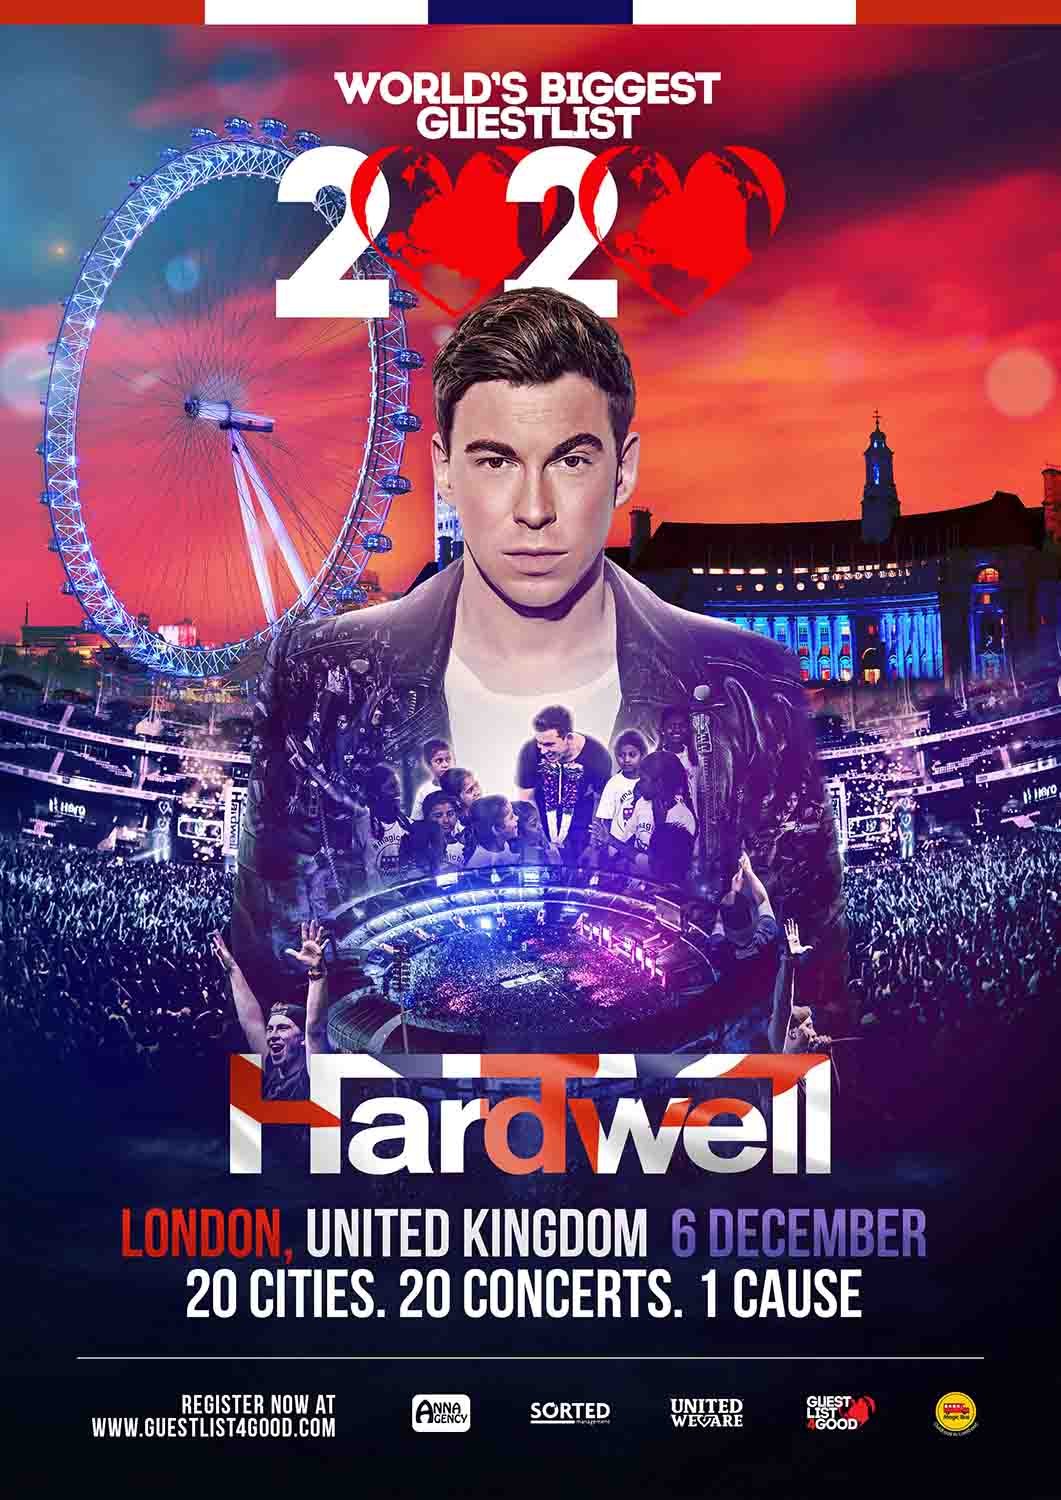 World's Biggest Guestlist Festival 2020 featuring Hardwell; London, UK